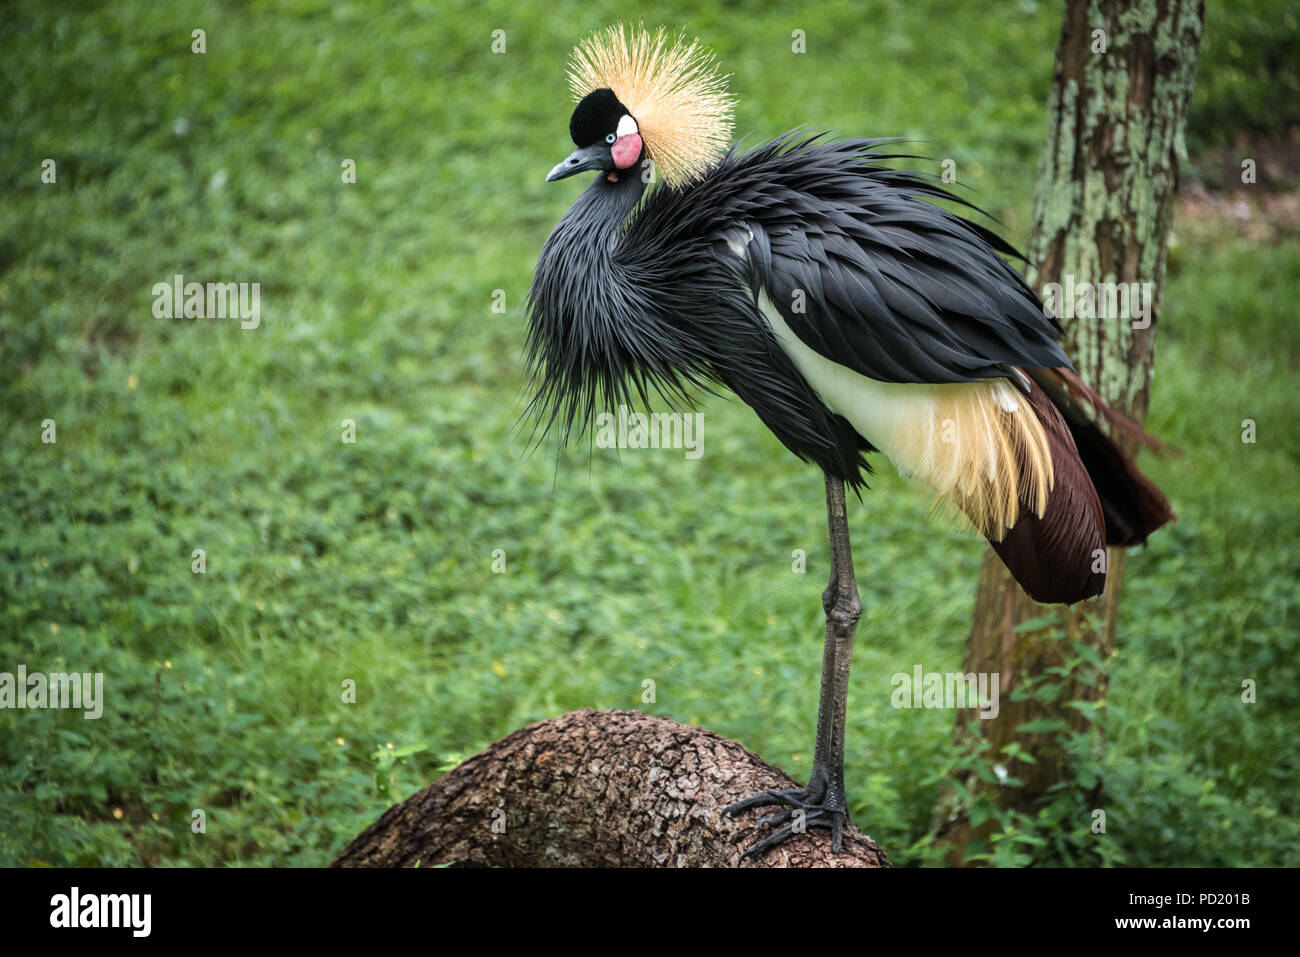 National bird nigeria hi-res stock photography and images - Alamy